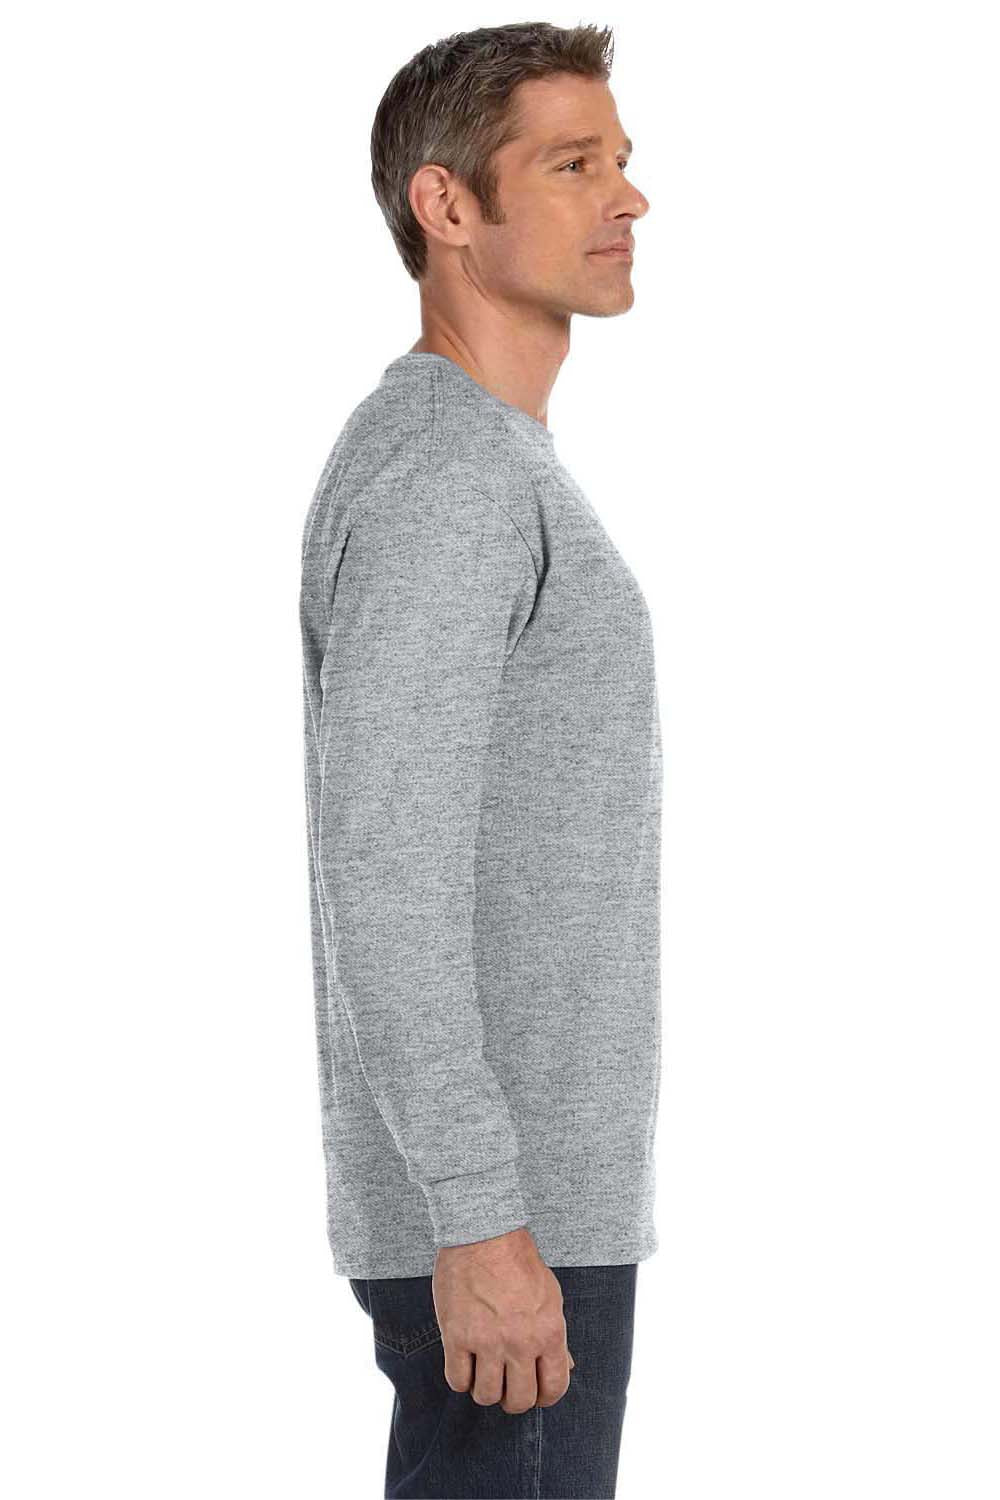 Jerzees 29L Mens Dri-Power Moisture Wicking Long Sleeve Crewneck T-Shirt Heather Grey Side